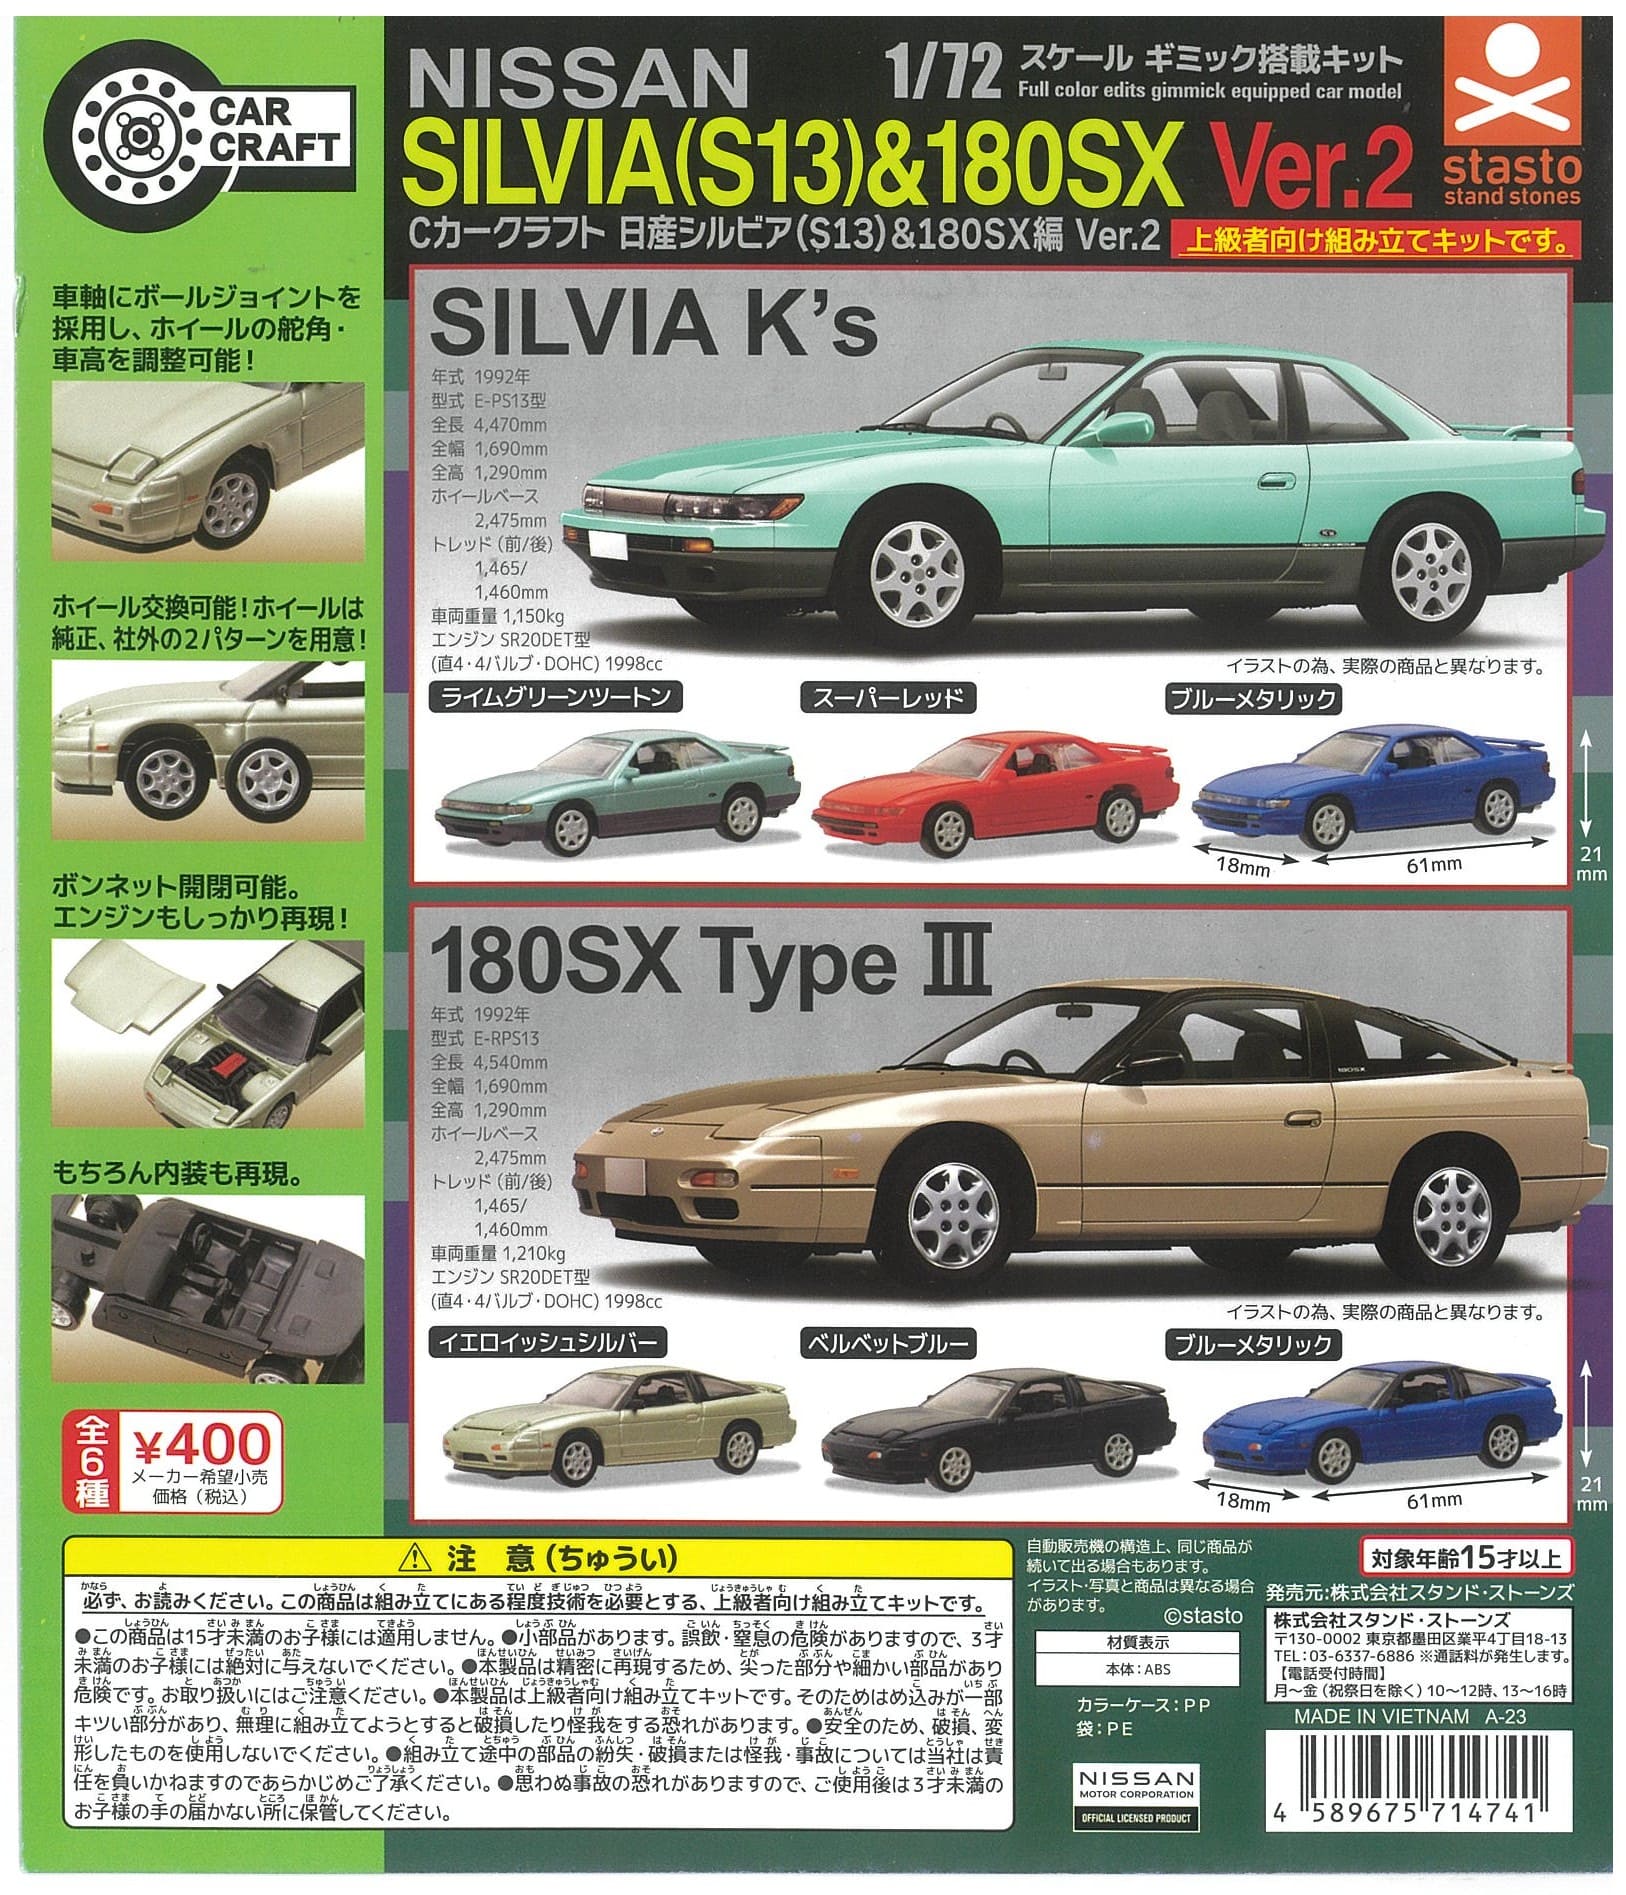 Stasto Stand Stone CP2092 C Car Craft Nissan Silvia (S13) & 180SX Ver 2